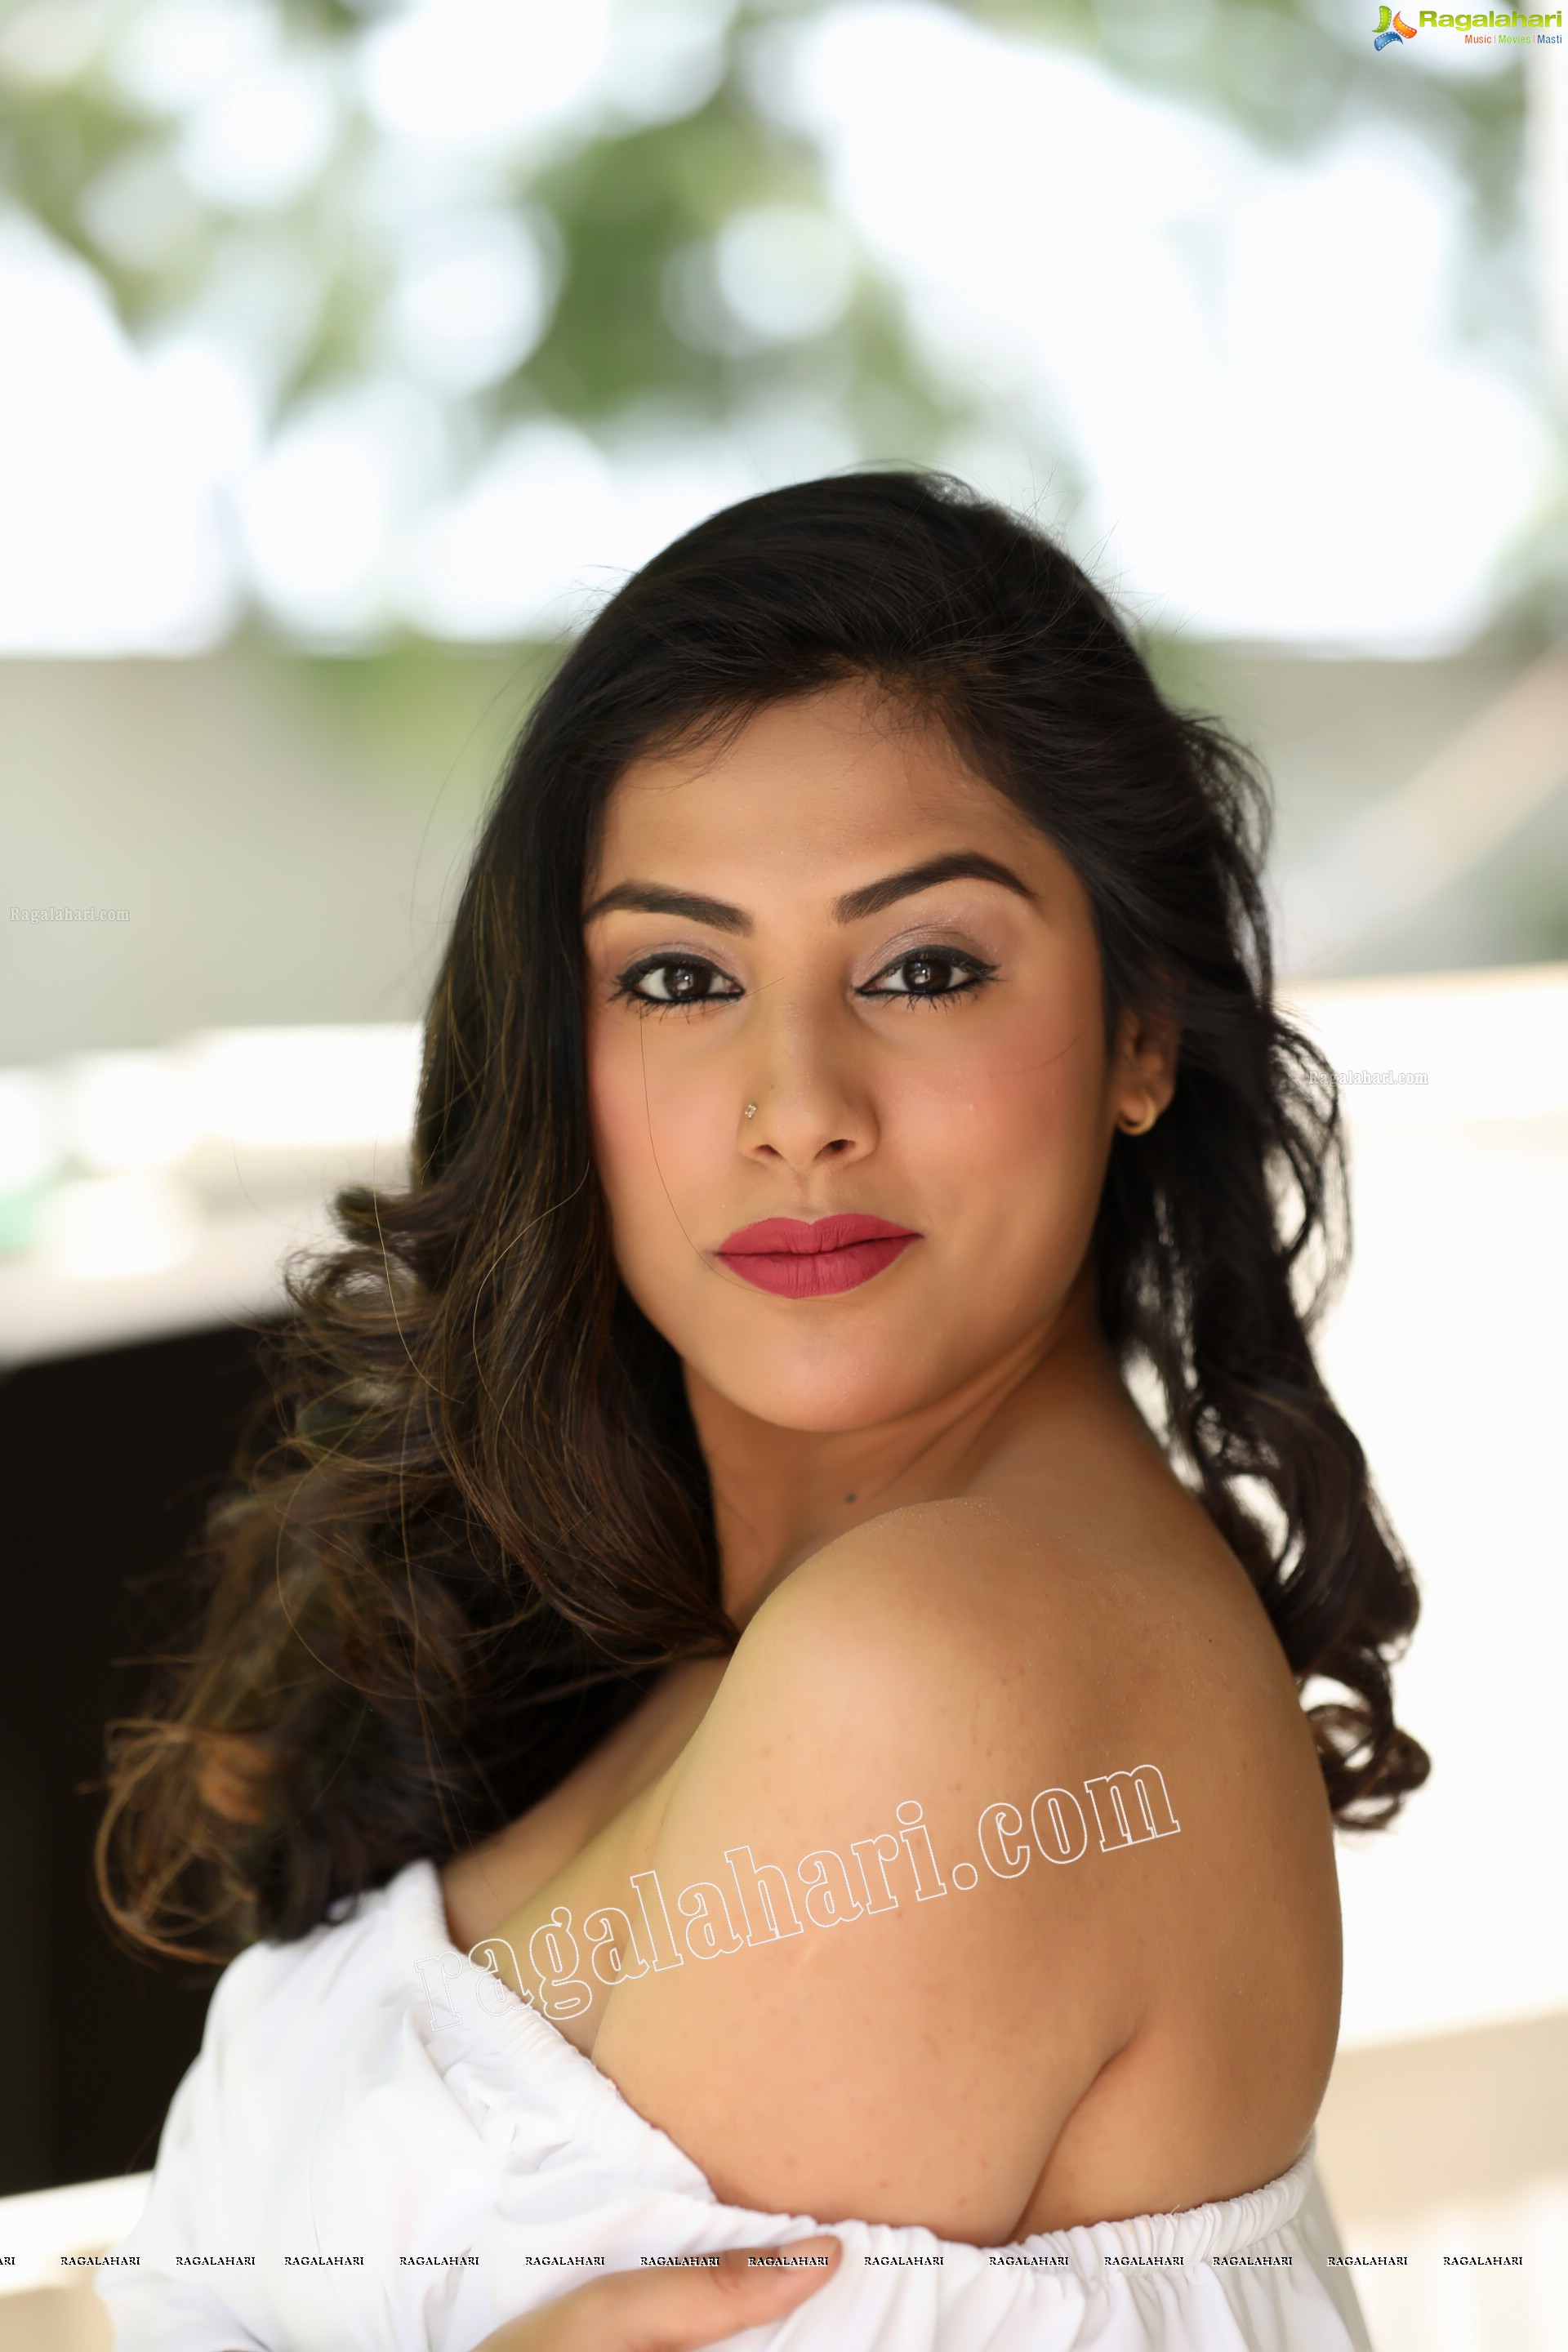 Barsha Bhuyan (Exclusive Photo Shoot) (High Definition Photos)